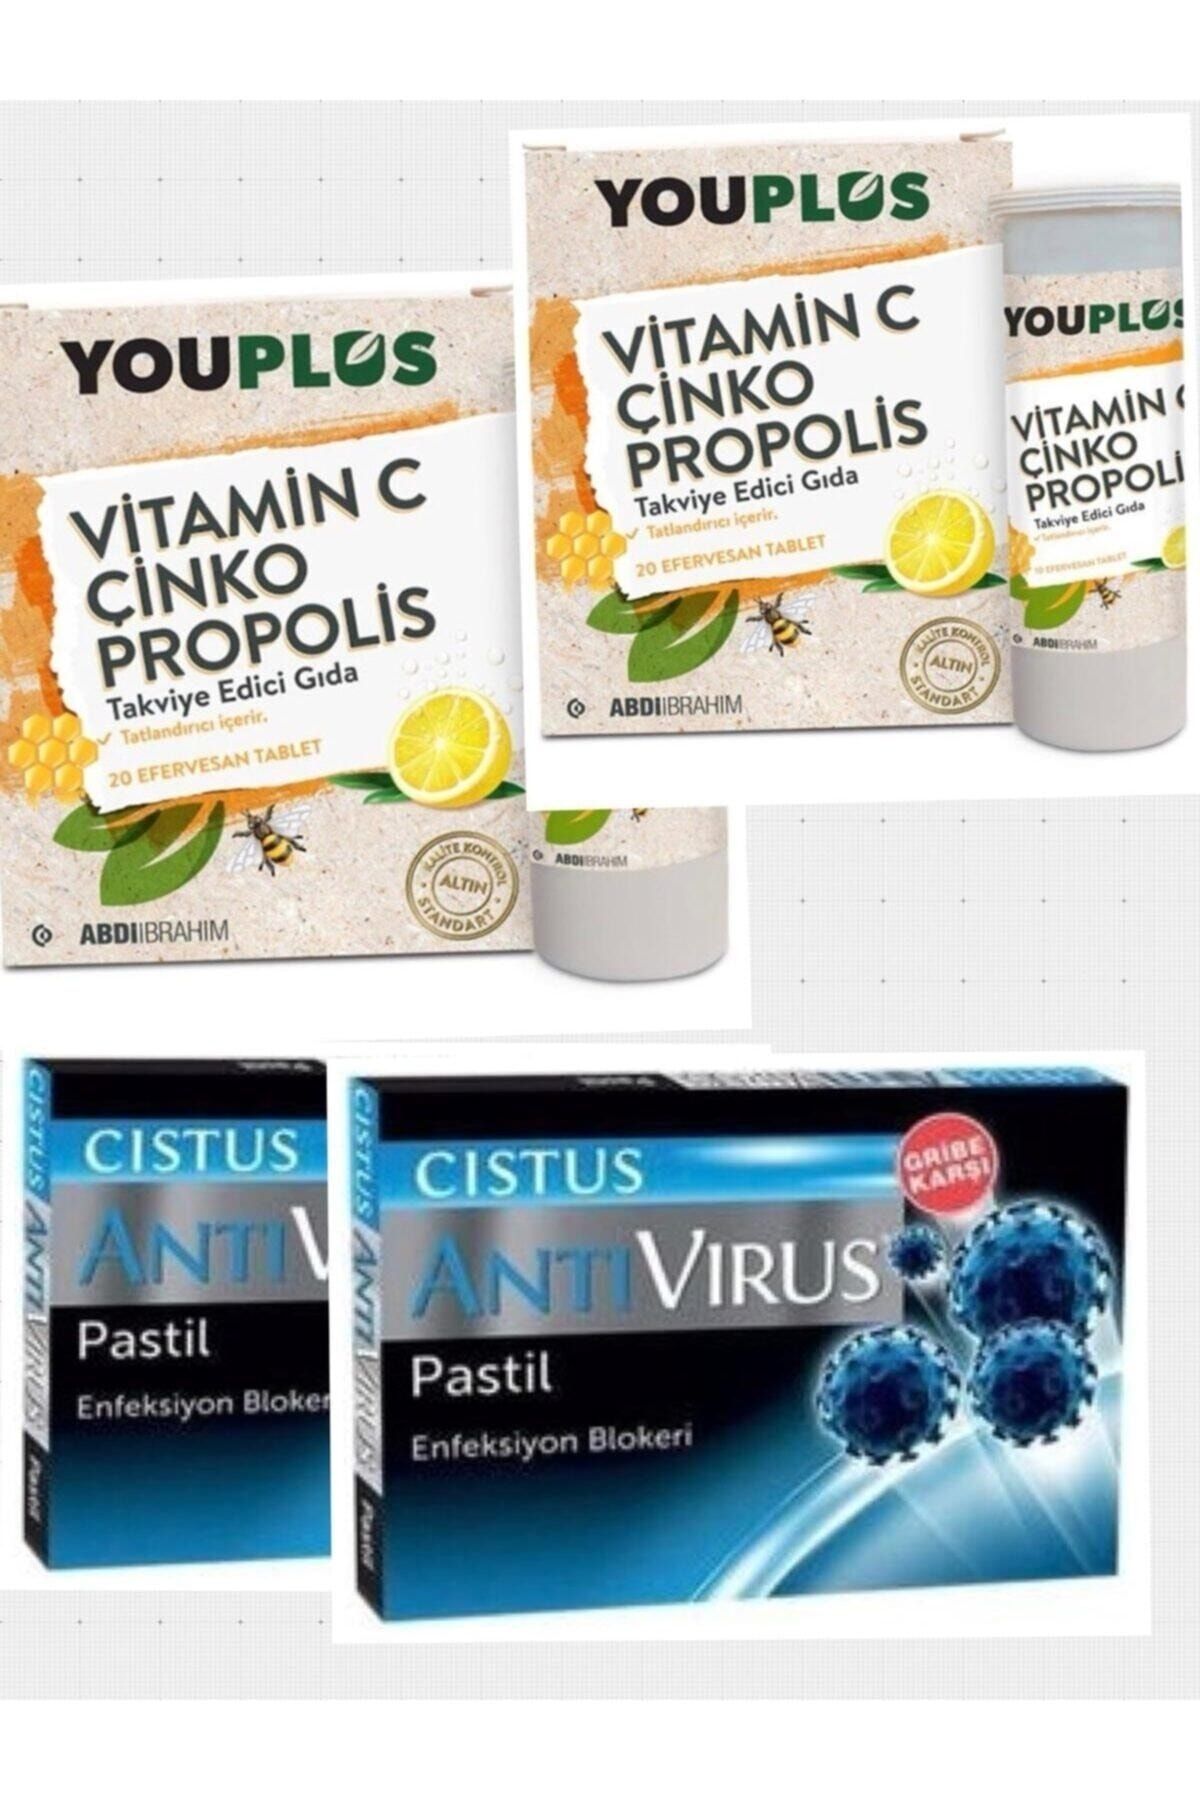 Youplus 2 Adet Youplus Vitamin C Çinko Propolis Ve 2 Adet Cistus Antivirüs Pastil